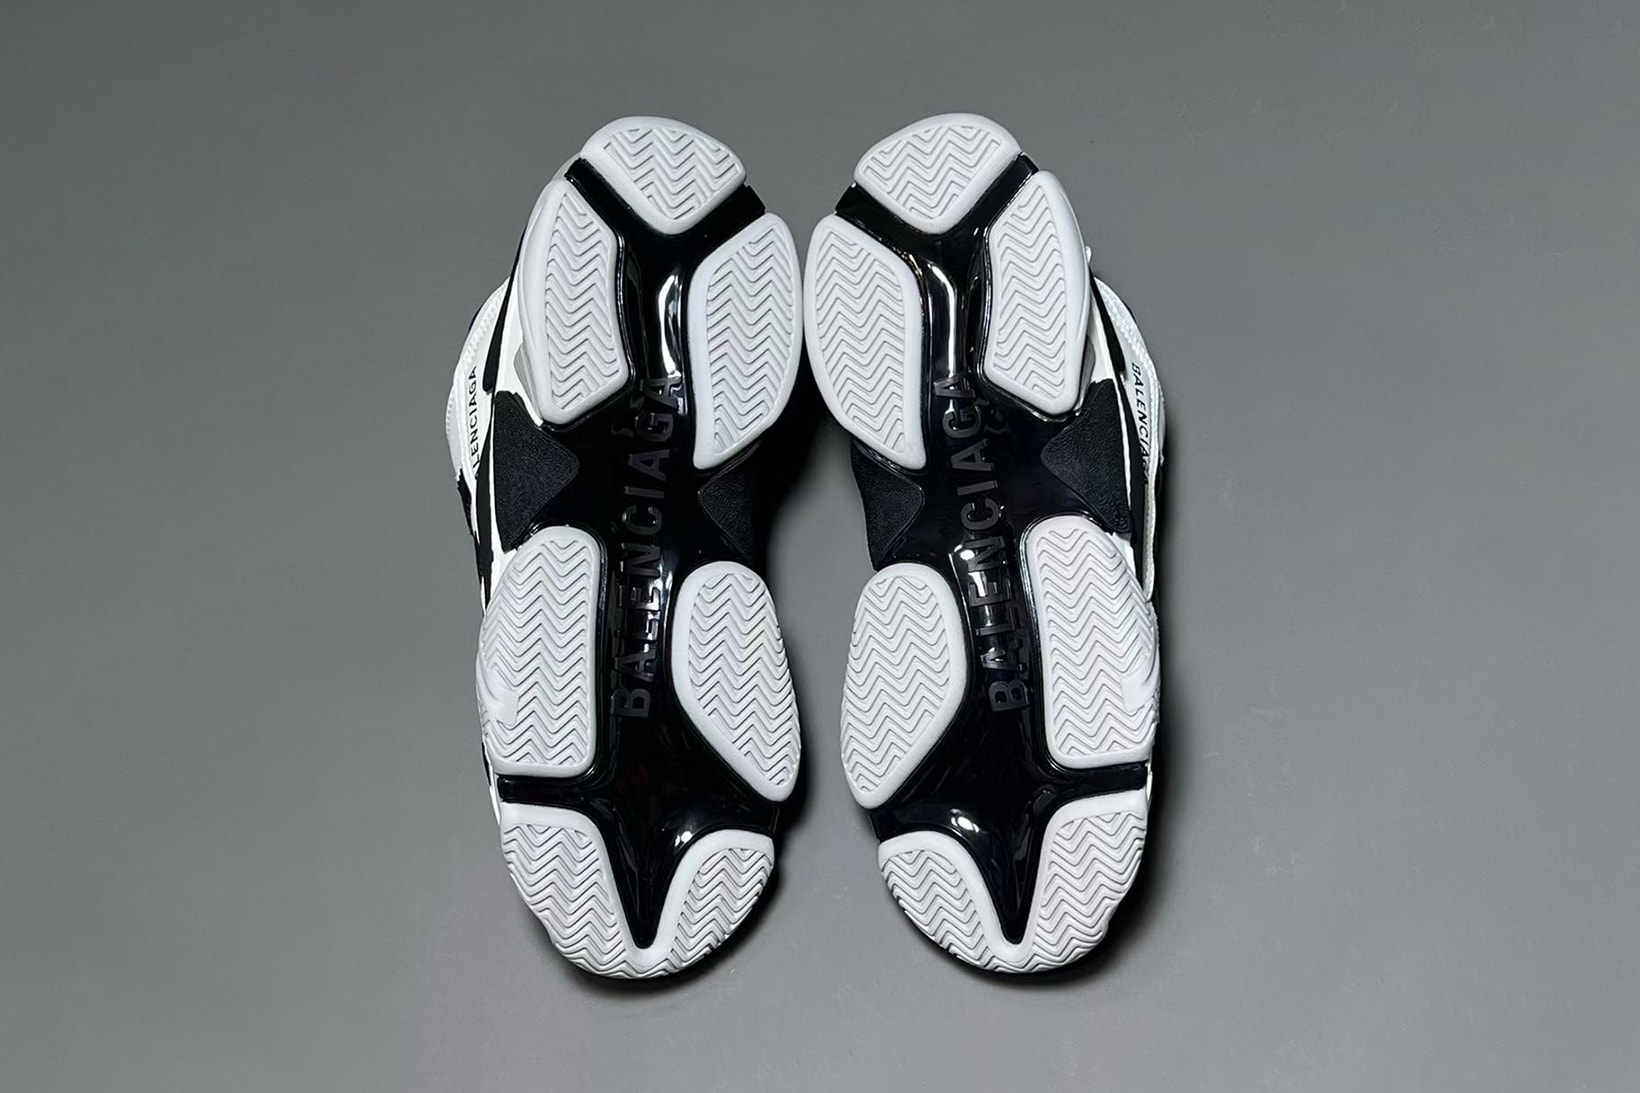 adidas Balenciaga Triple-S Collaboration Sneakers Footwear Kicks White Black Shoes